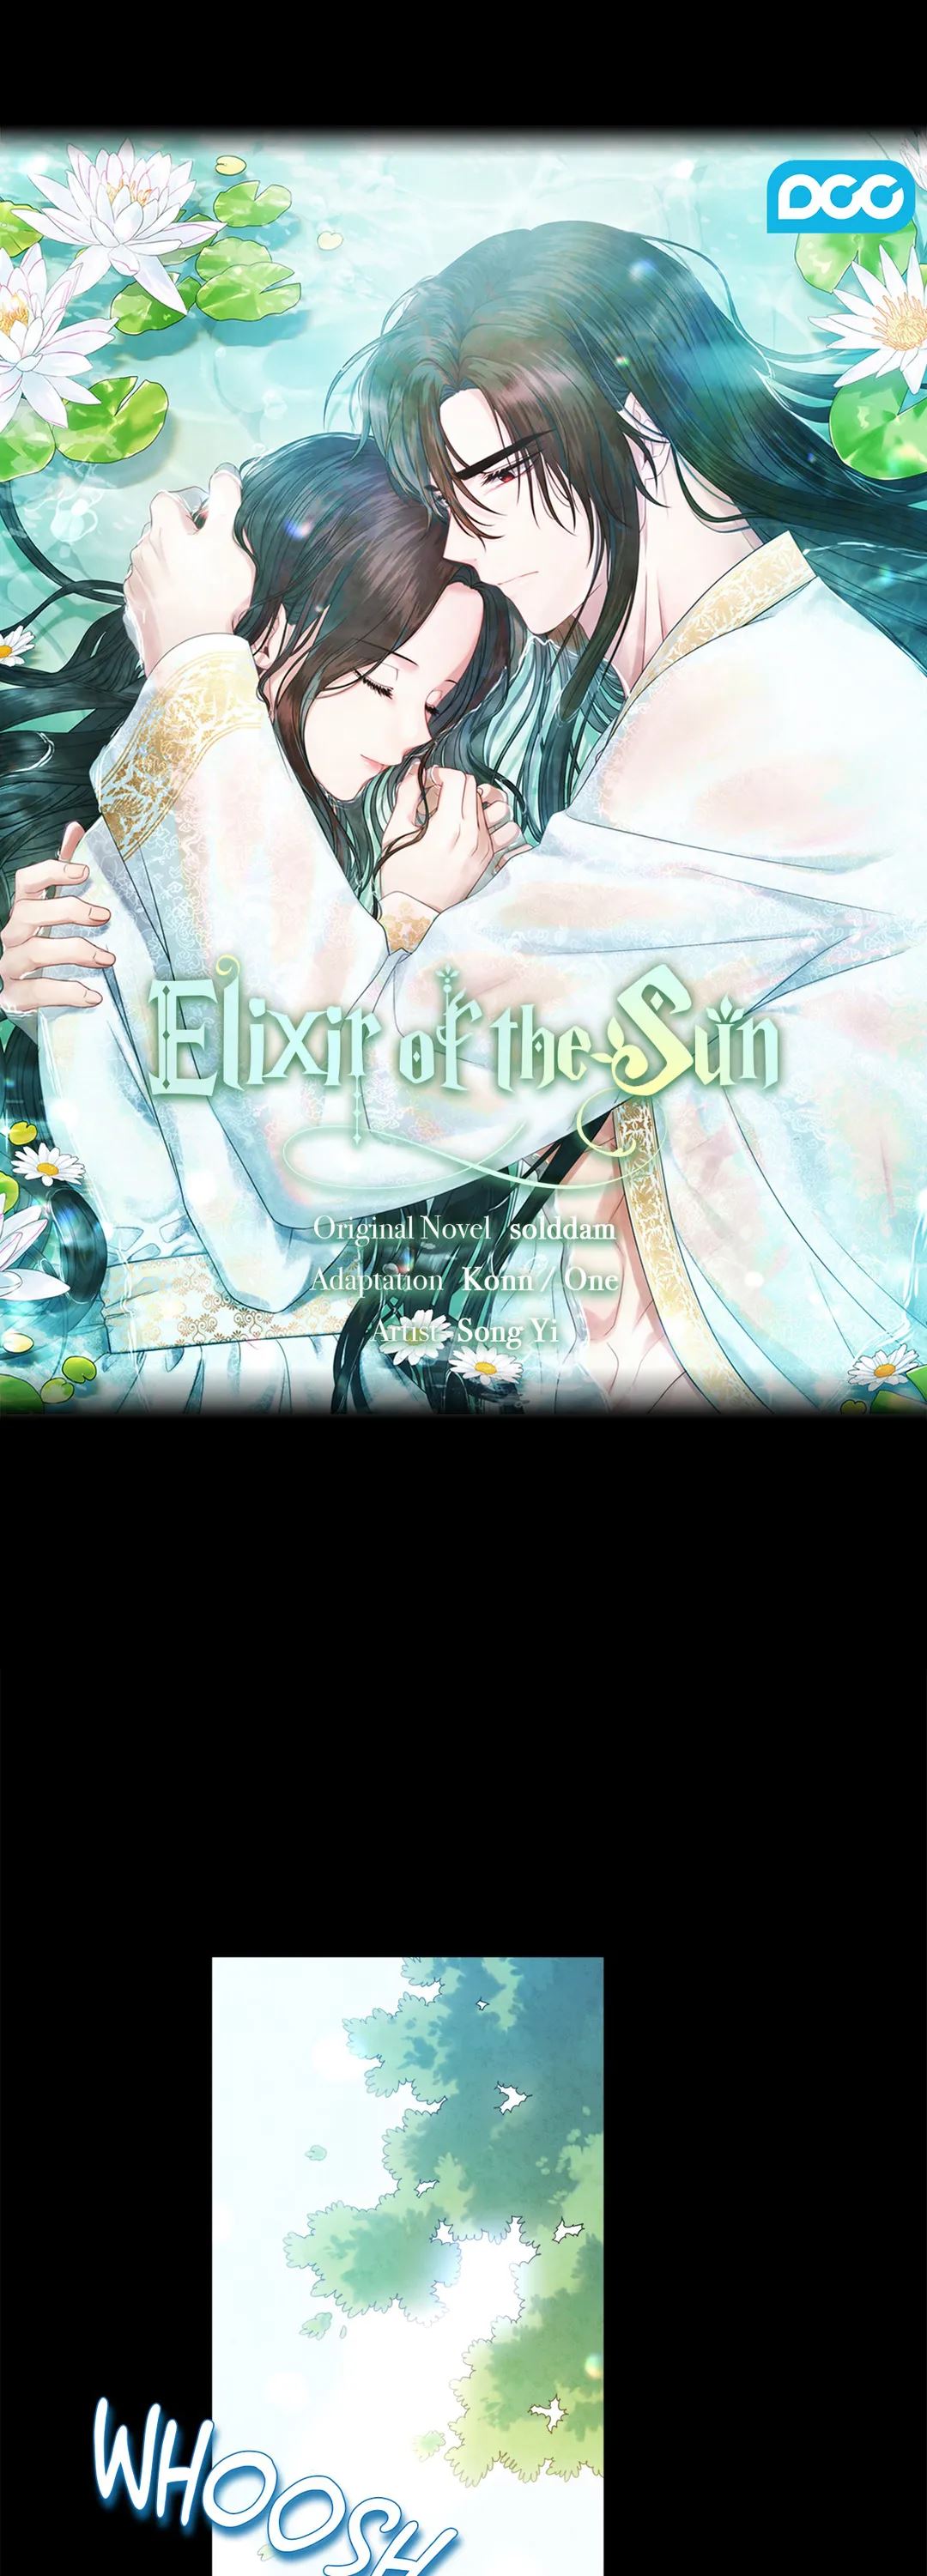 Elixir of the Sun image